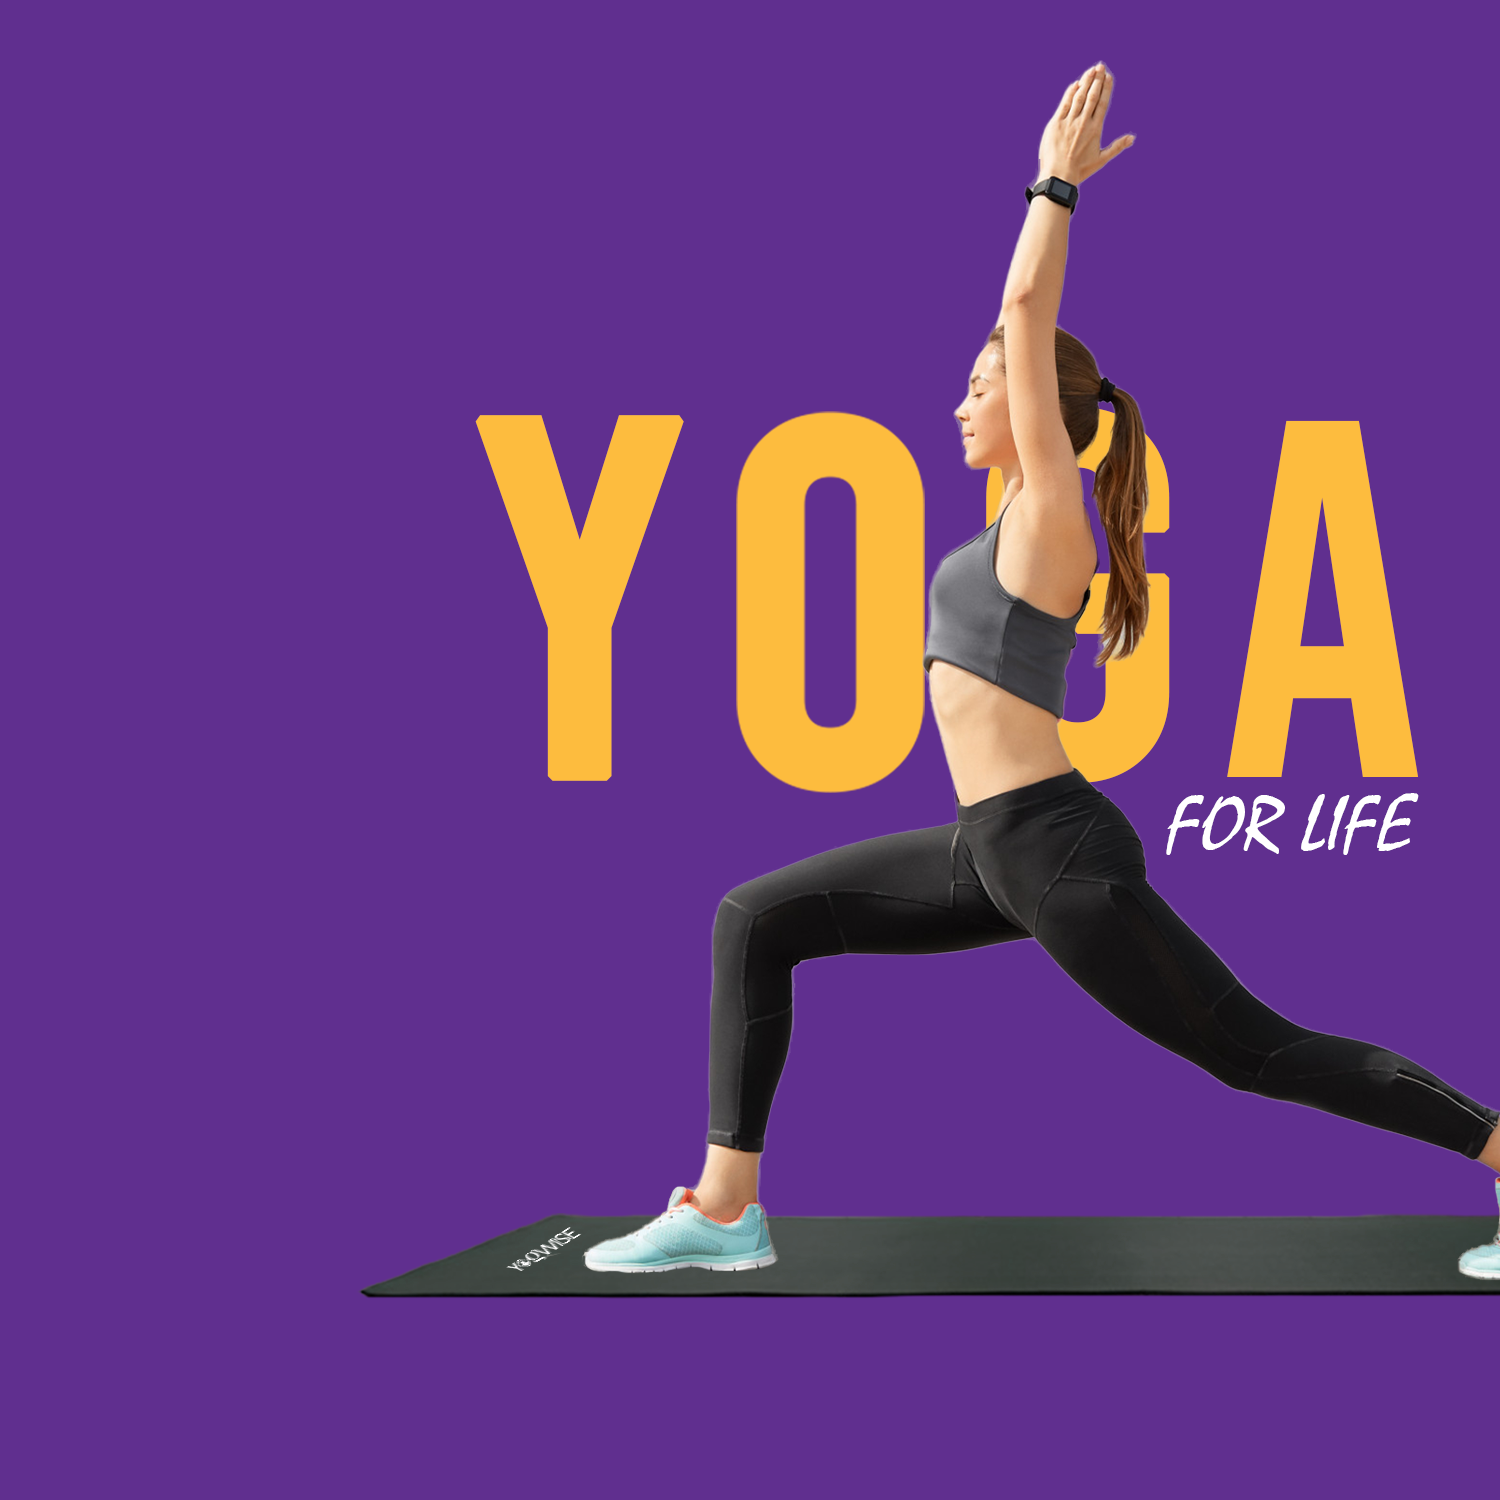 Yogwise - Yoga Classes & Yoga Accessories Online Store